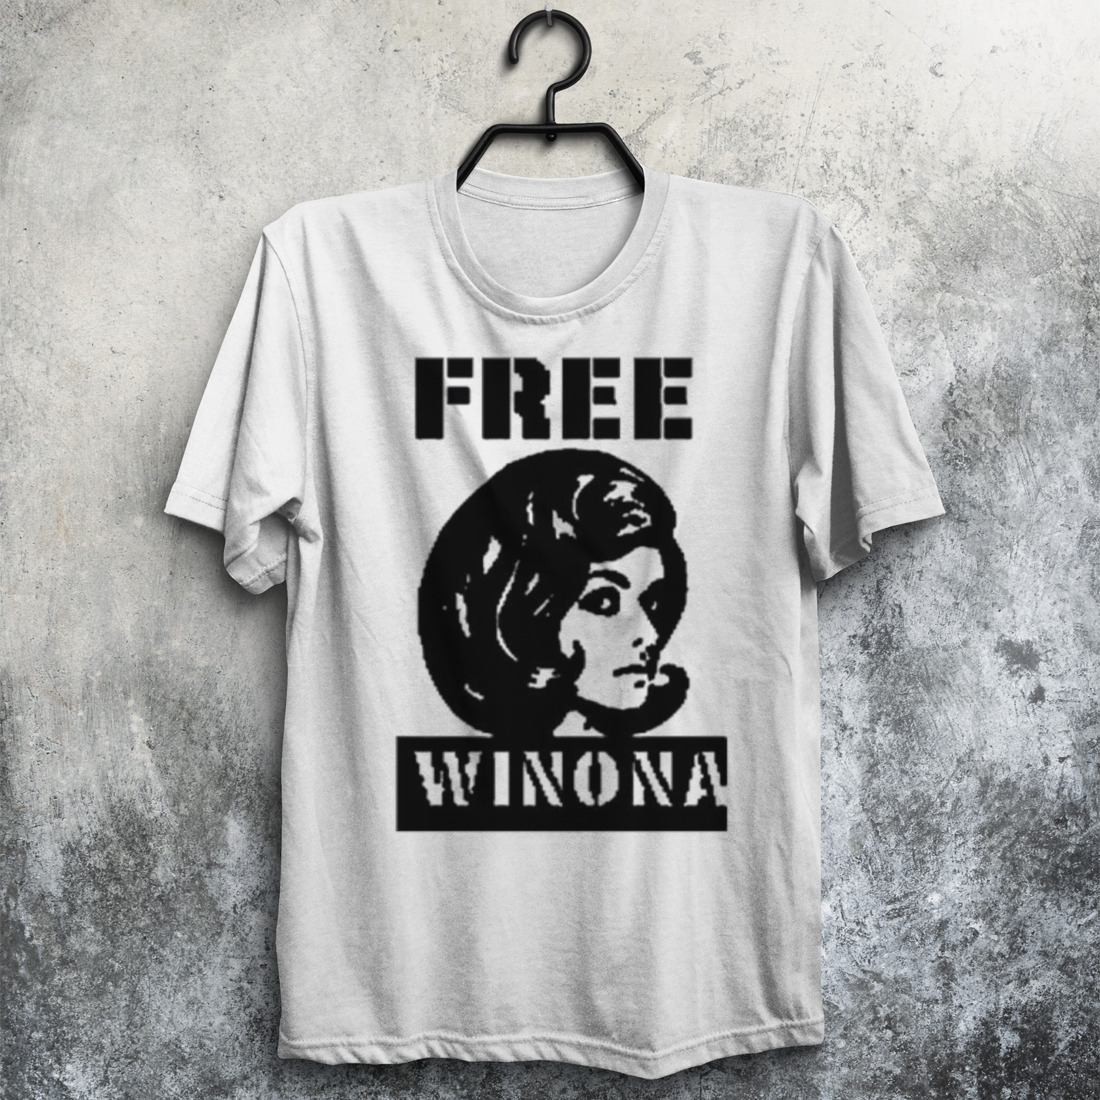 Free Winona shirt